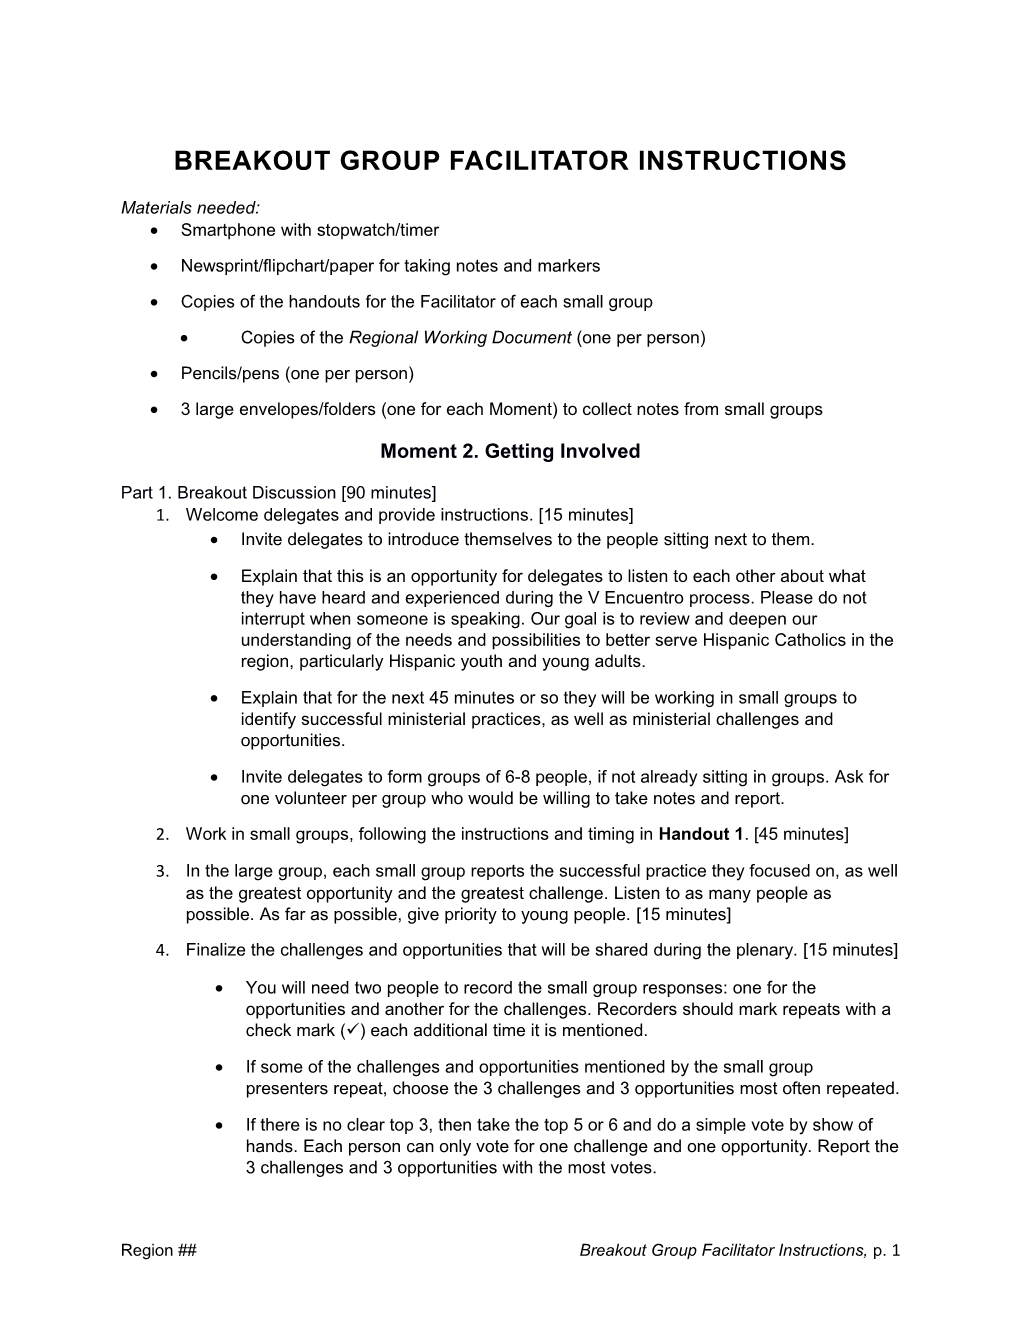 Breakout Group Facilitator Instructions